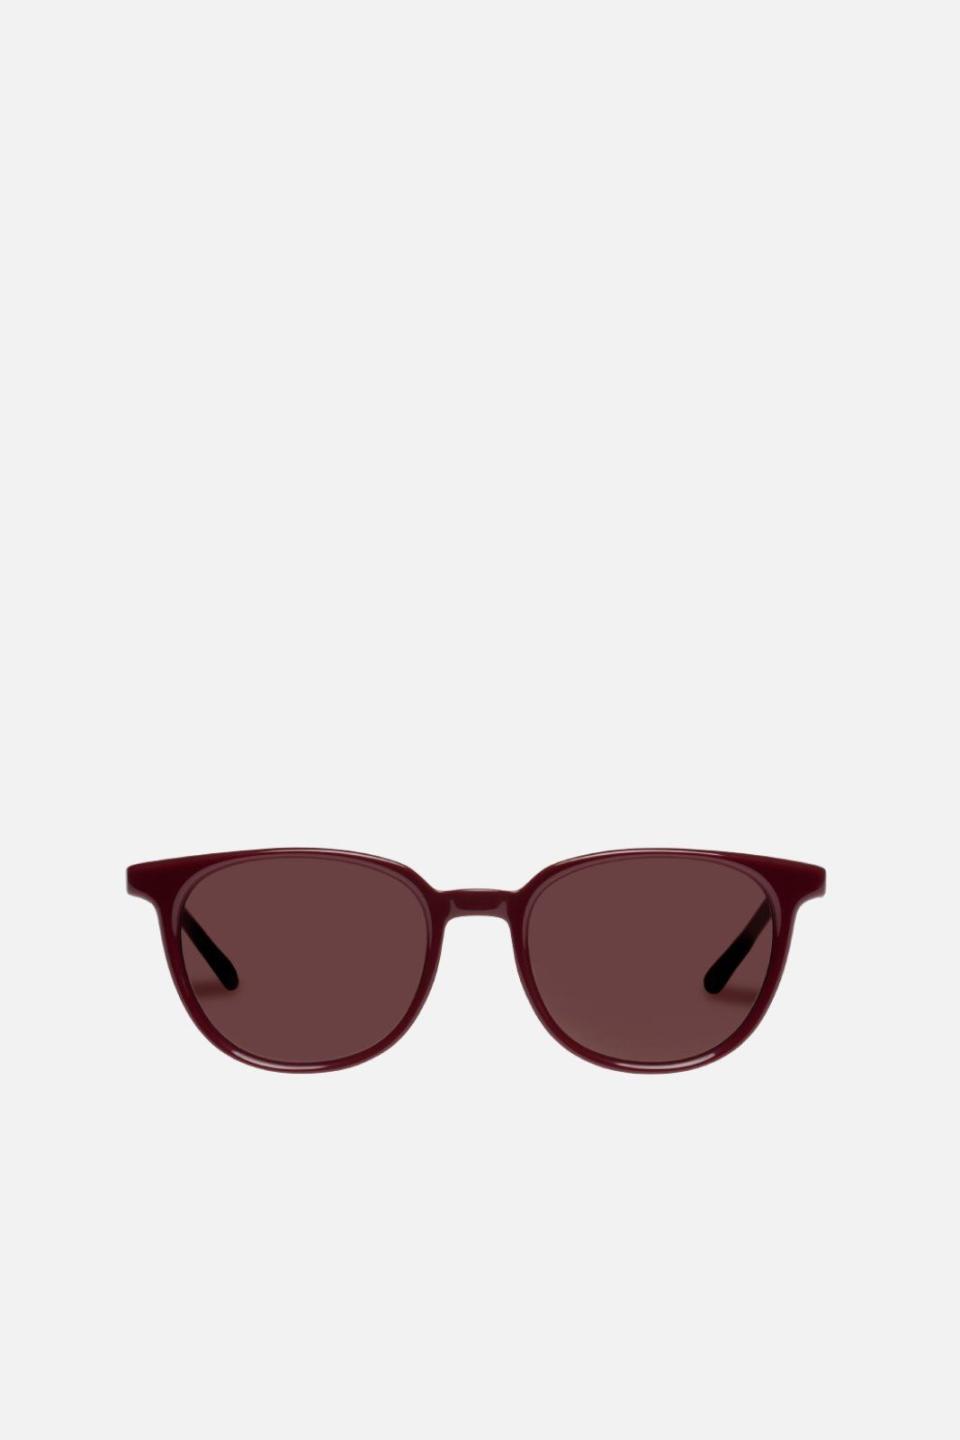 10) Nomad Sunglasses